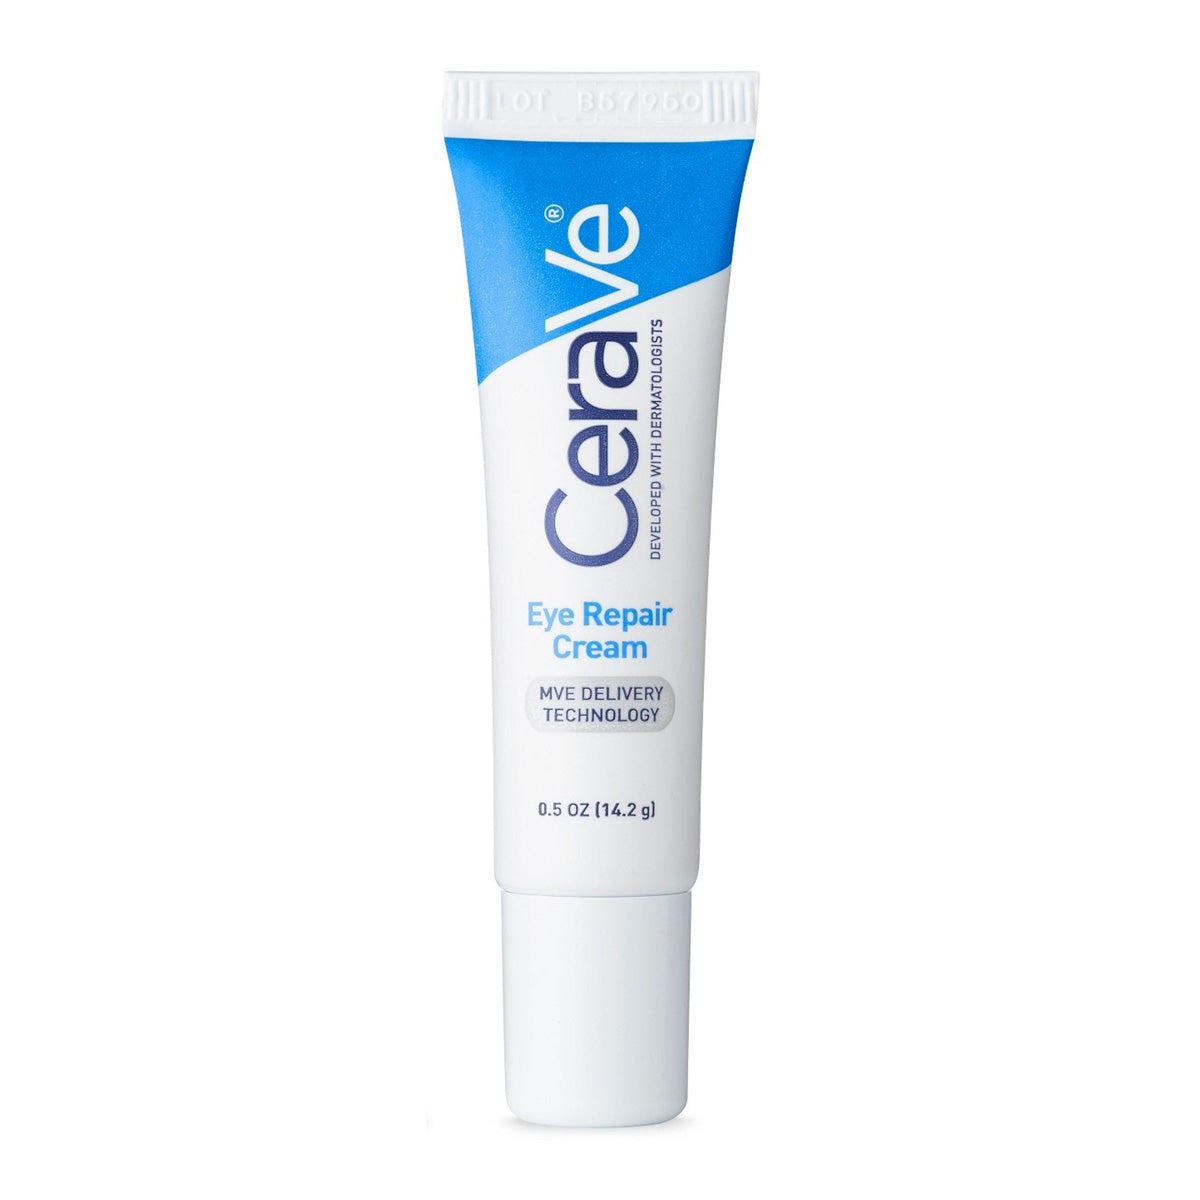 Eye Repair Cream - Cerave